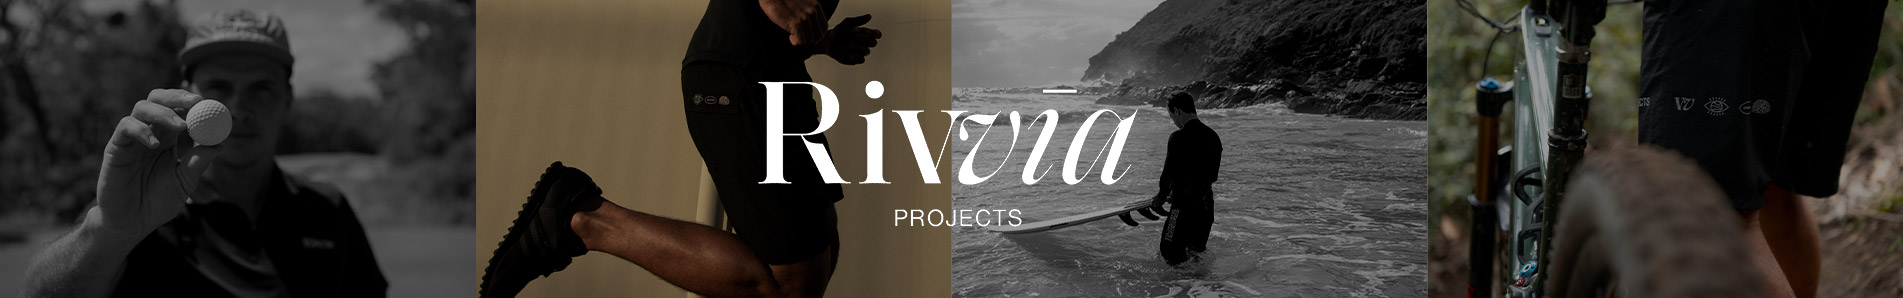 Rivvia Projects